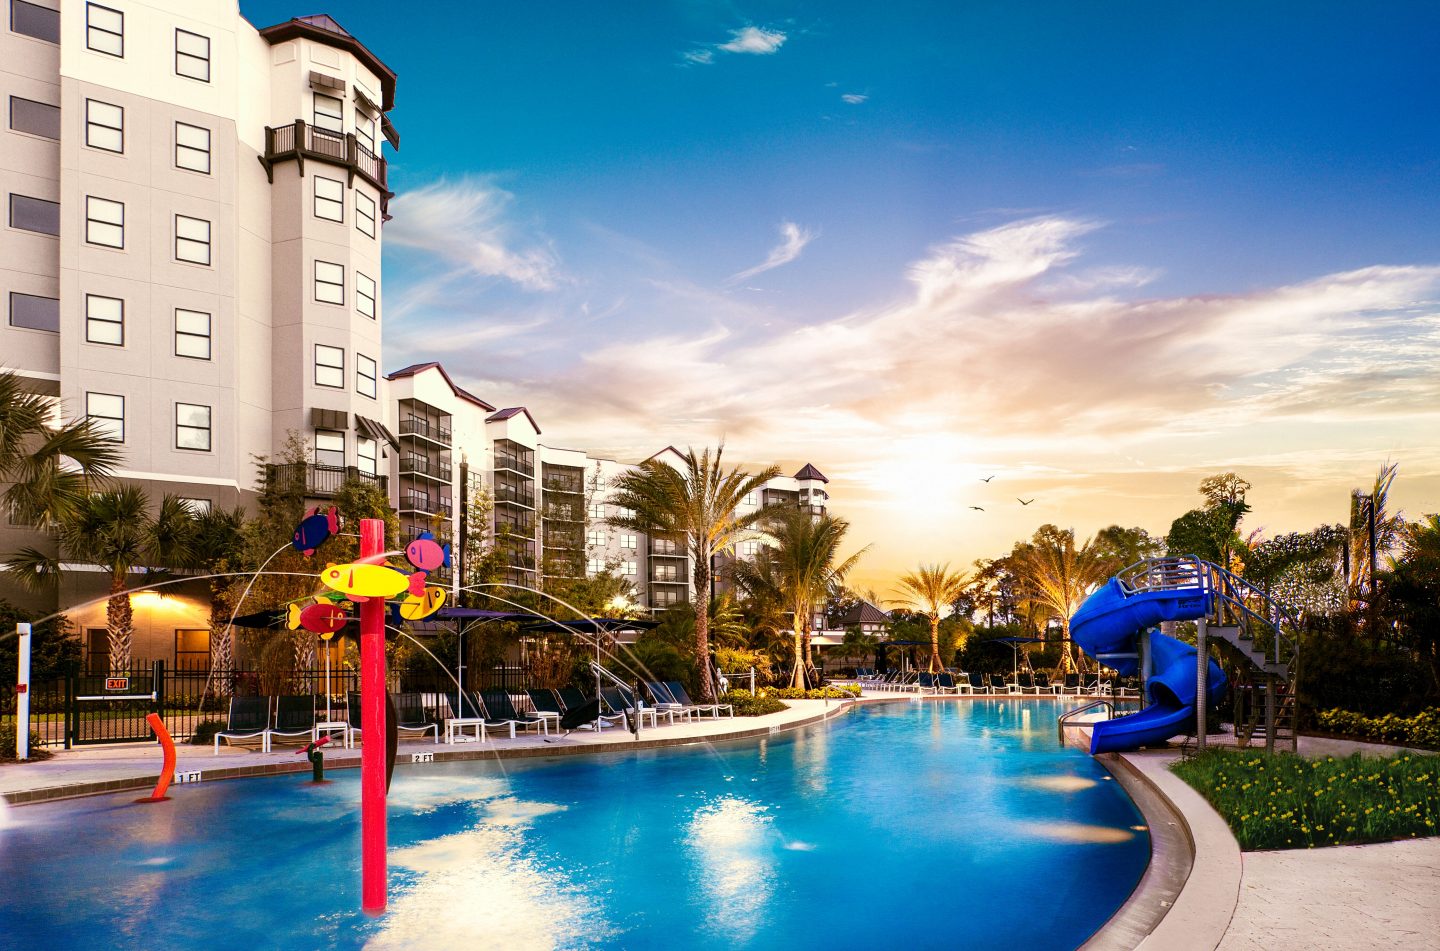 Resort Condos/Waterpark 12BR & 12BR from $1200s!  Top Ten Real